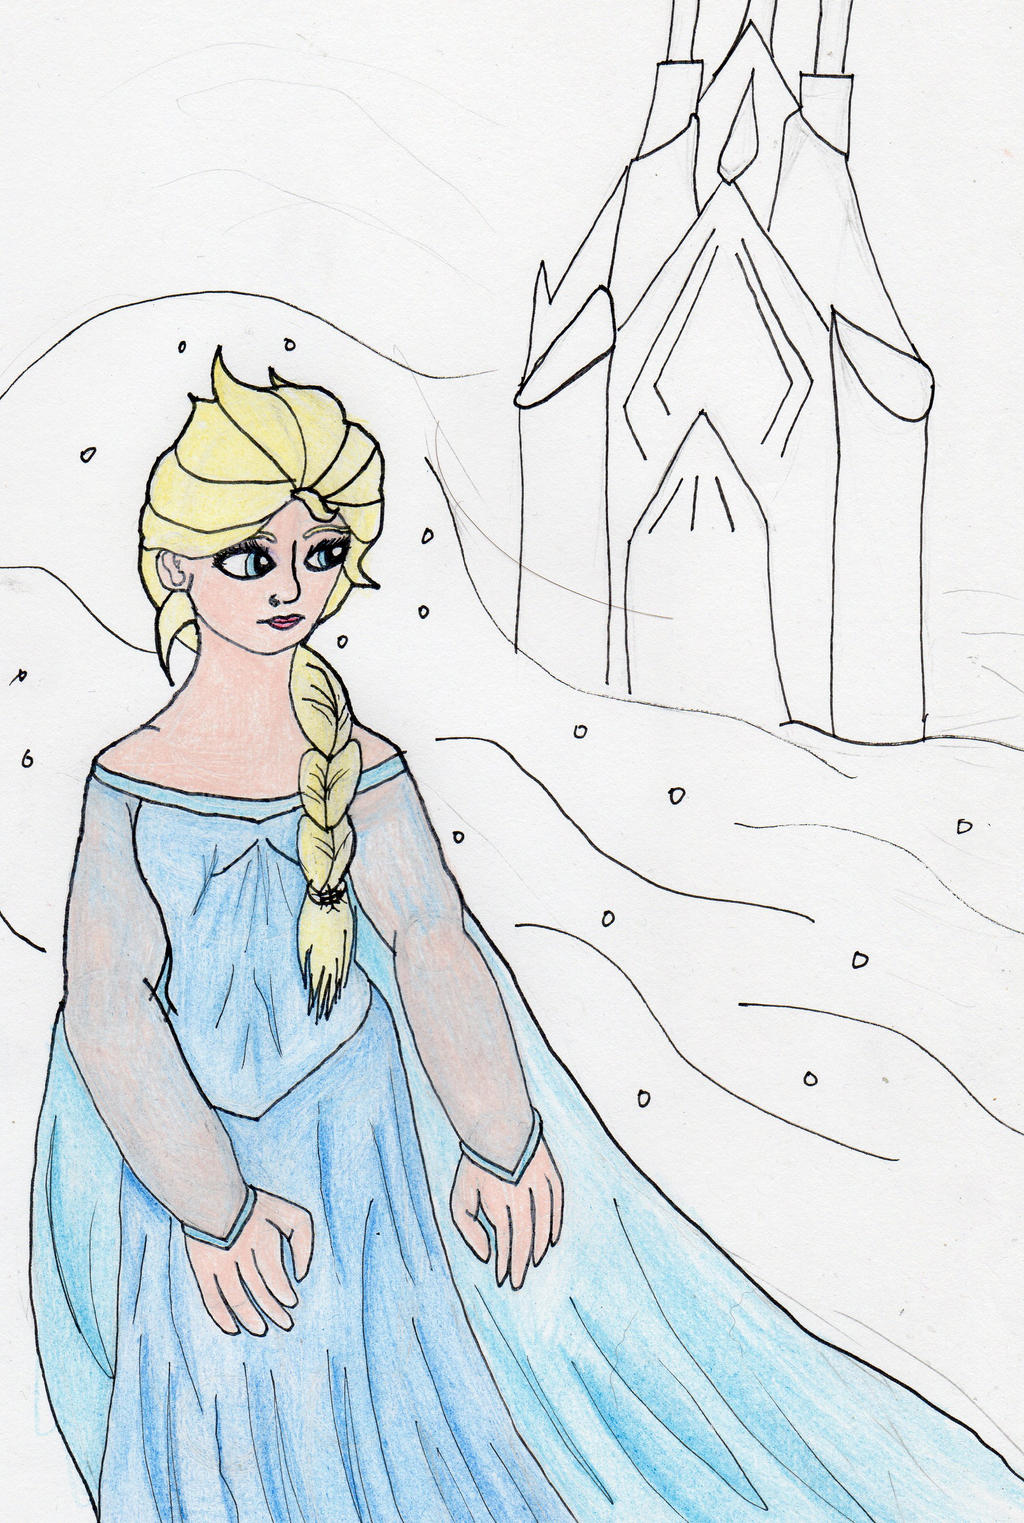 Frozen: Ice Castle by kakashisgirlfighter on DeviantArt